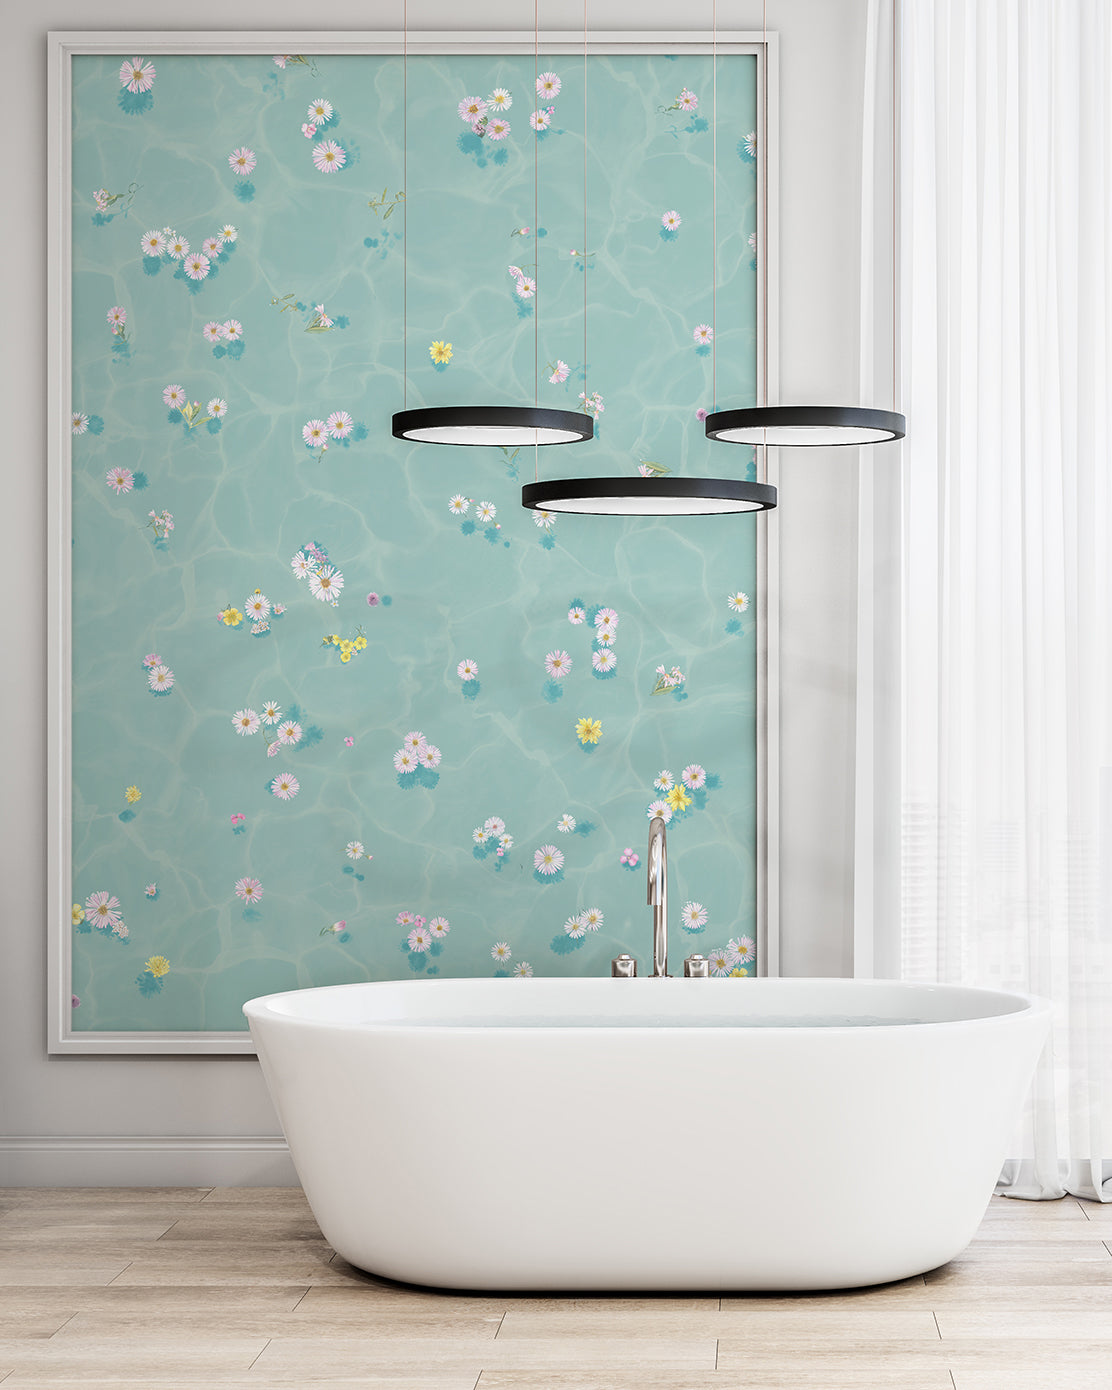 blue floral wallpaper in bathroom behind bathtub